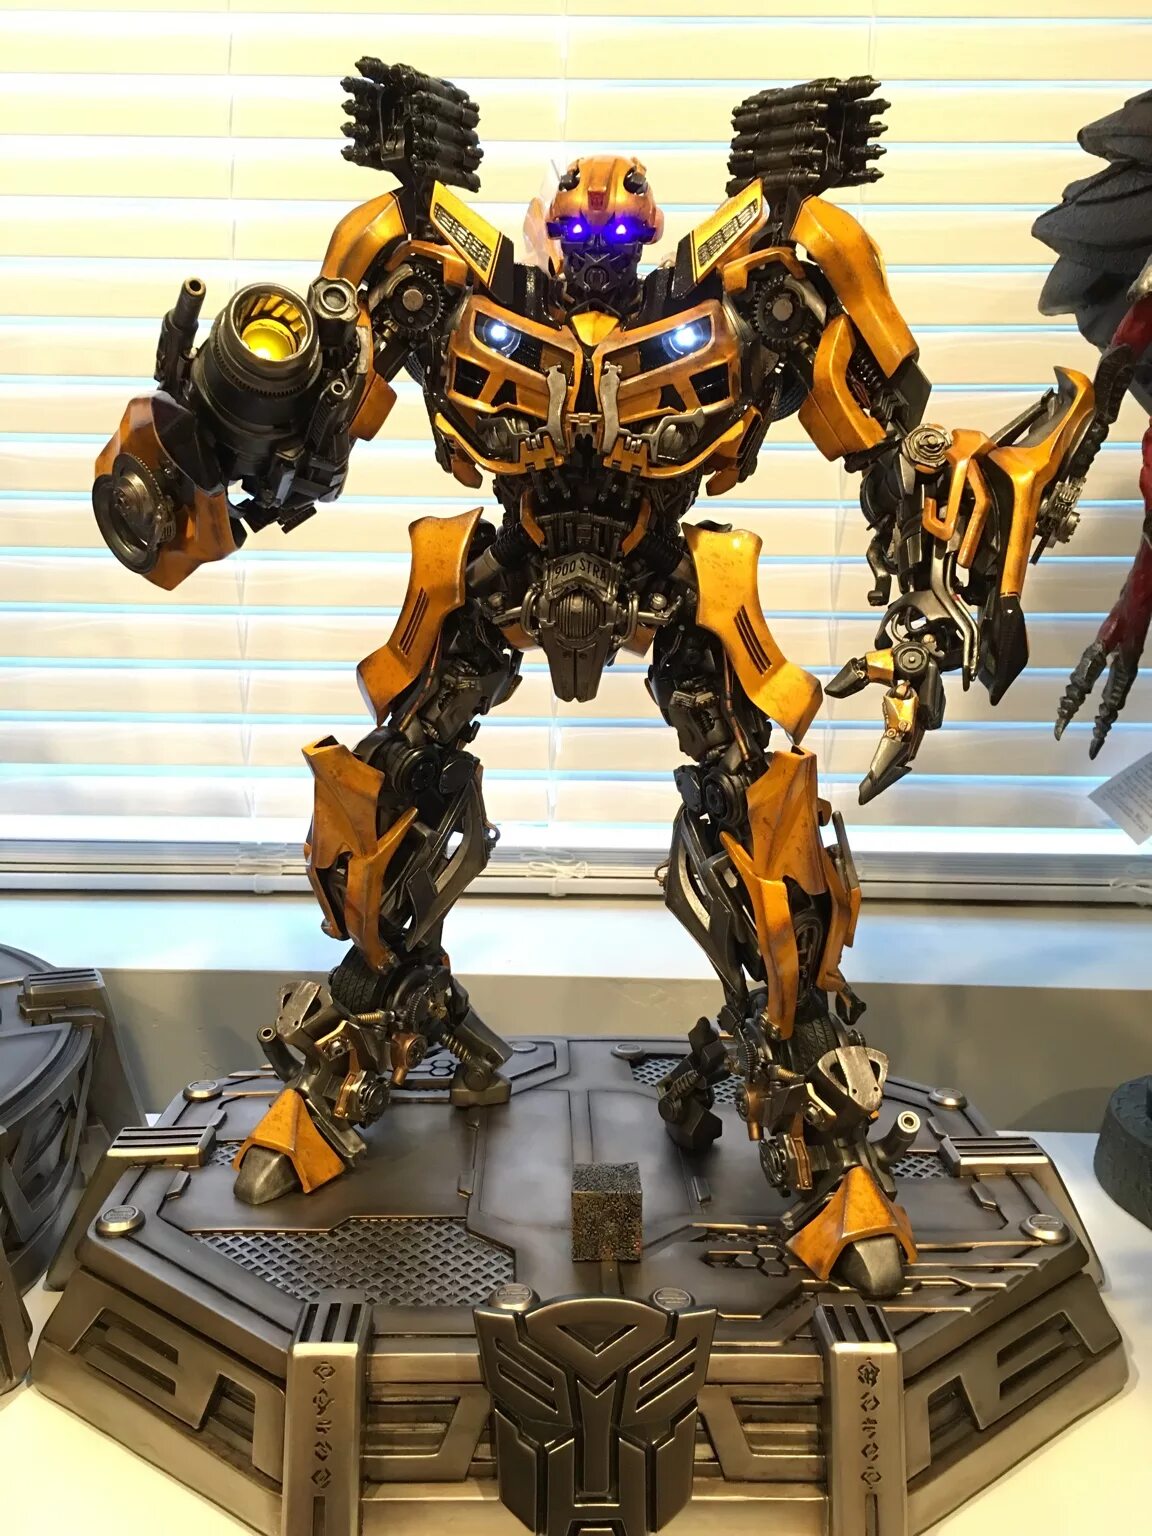 Transformers Bumblebee Statue. Статуя Бамблби Прайм. Лилия Бамблби. Бамблби из g1.